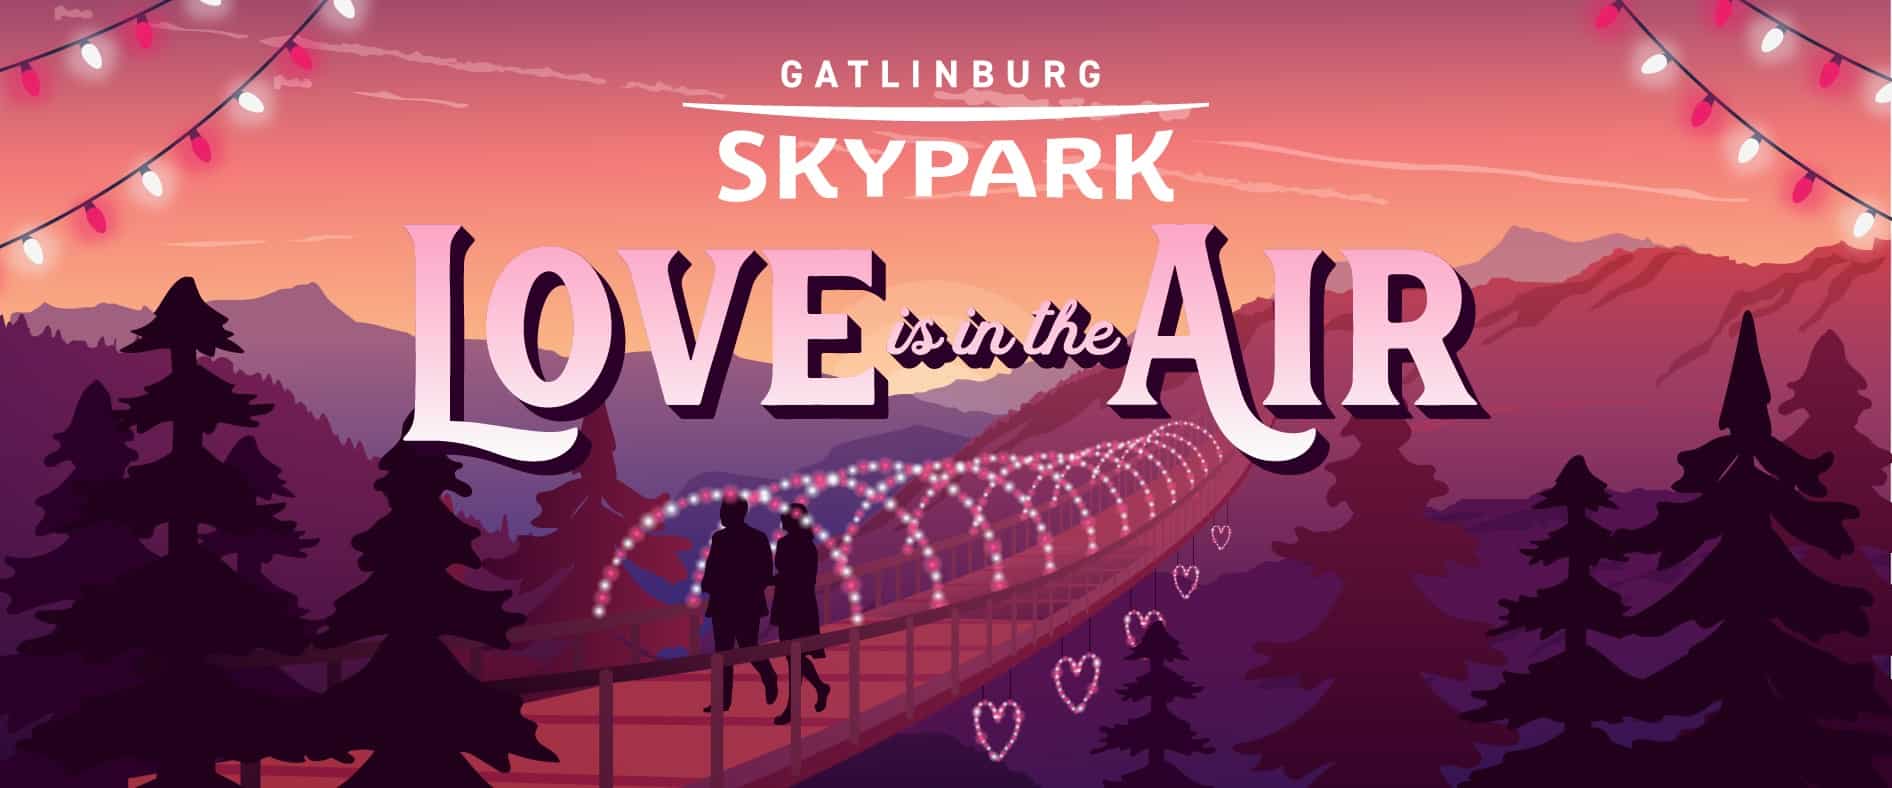 Love is in the Air at Gatlinburg SkyPark 